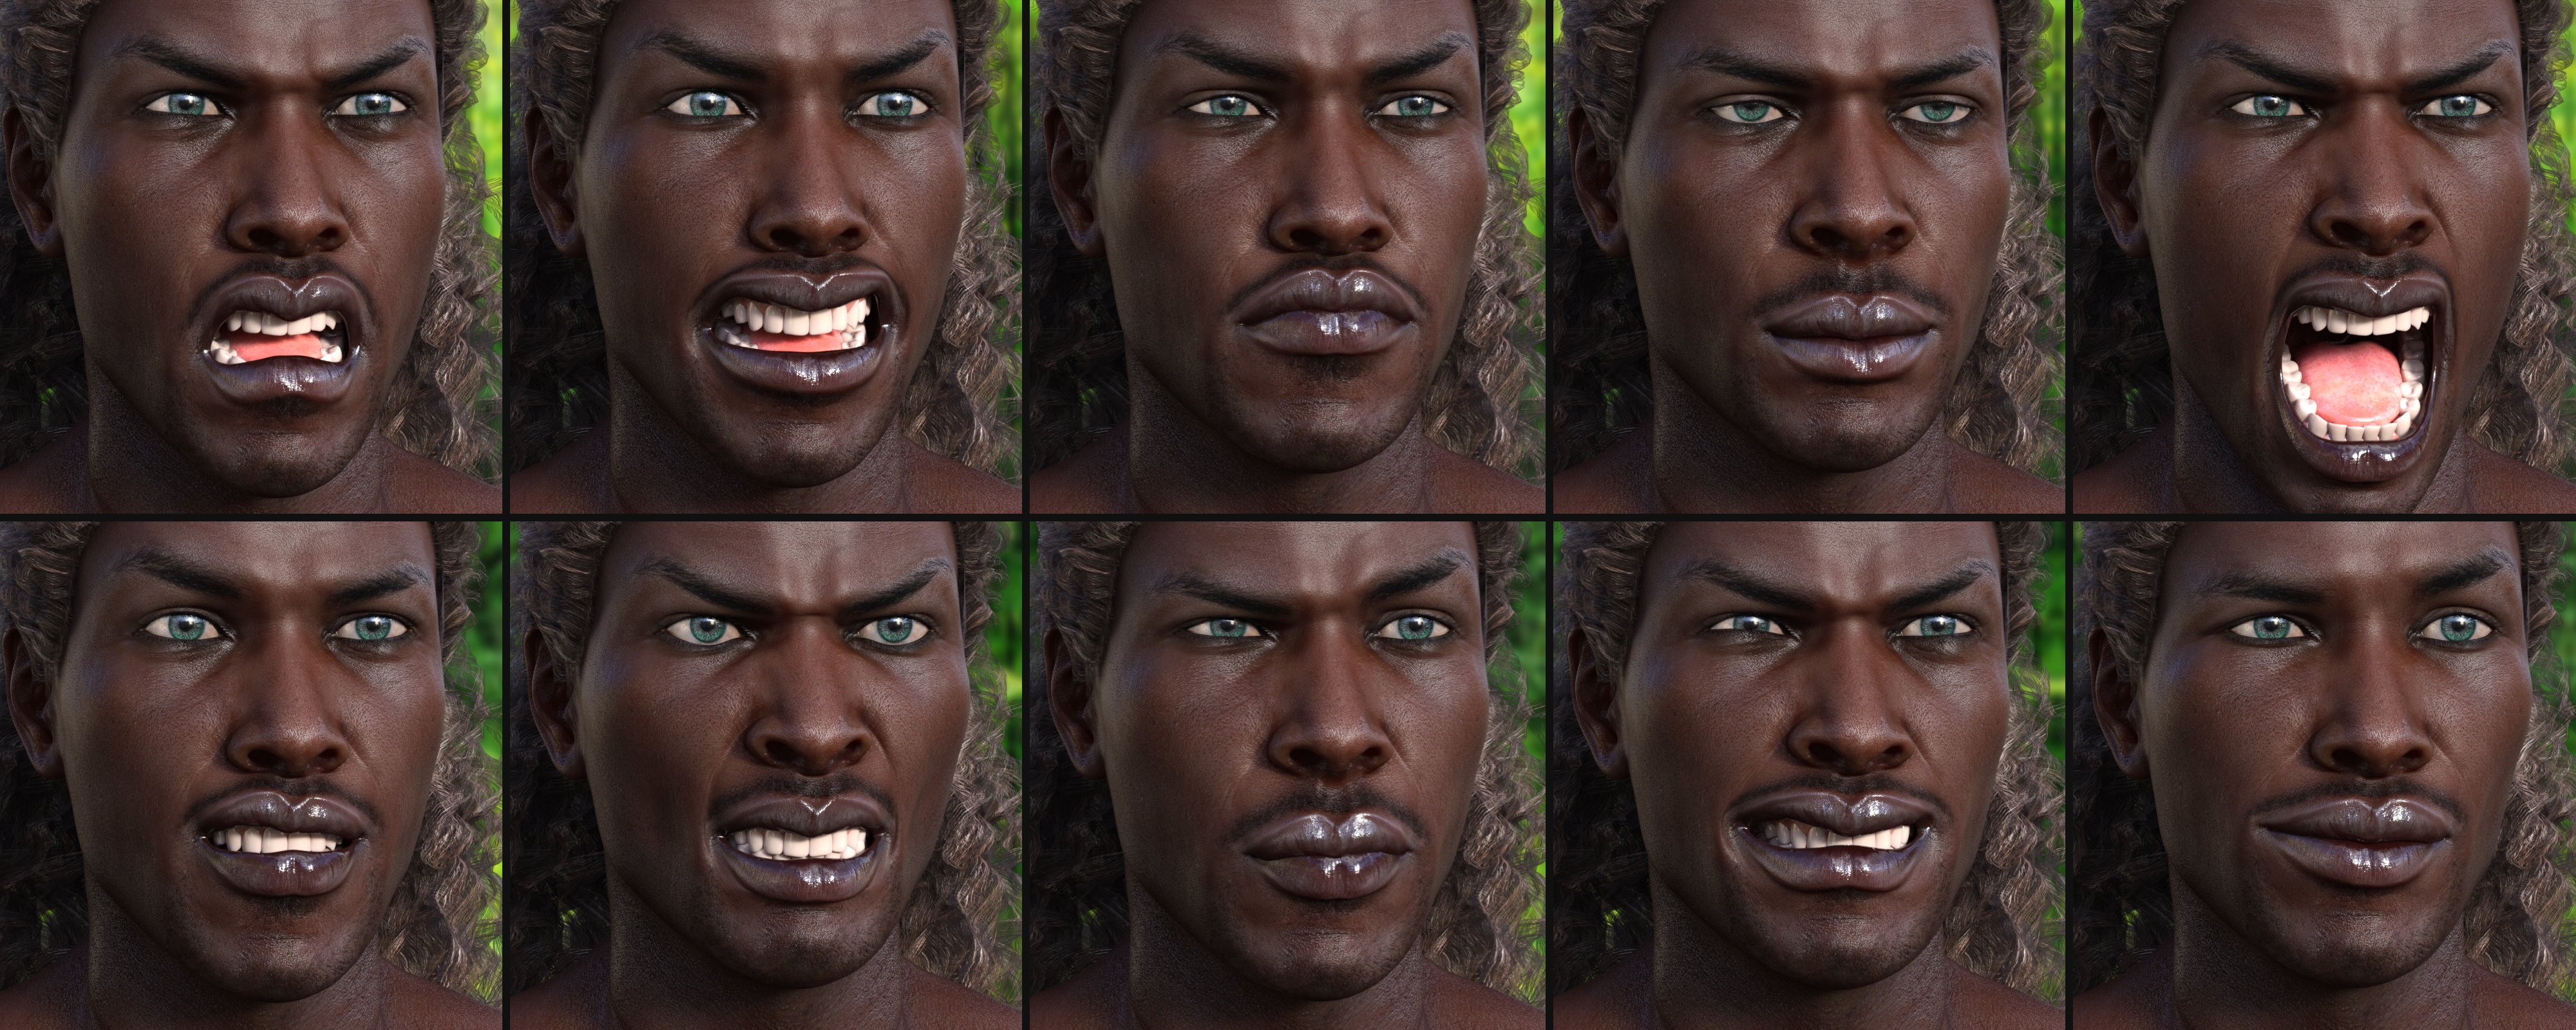 Darius 7 Wild Expressive by: Neikdian, 3D Models by Daz 3D